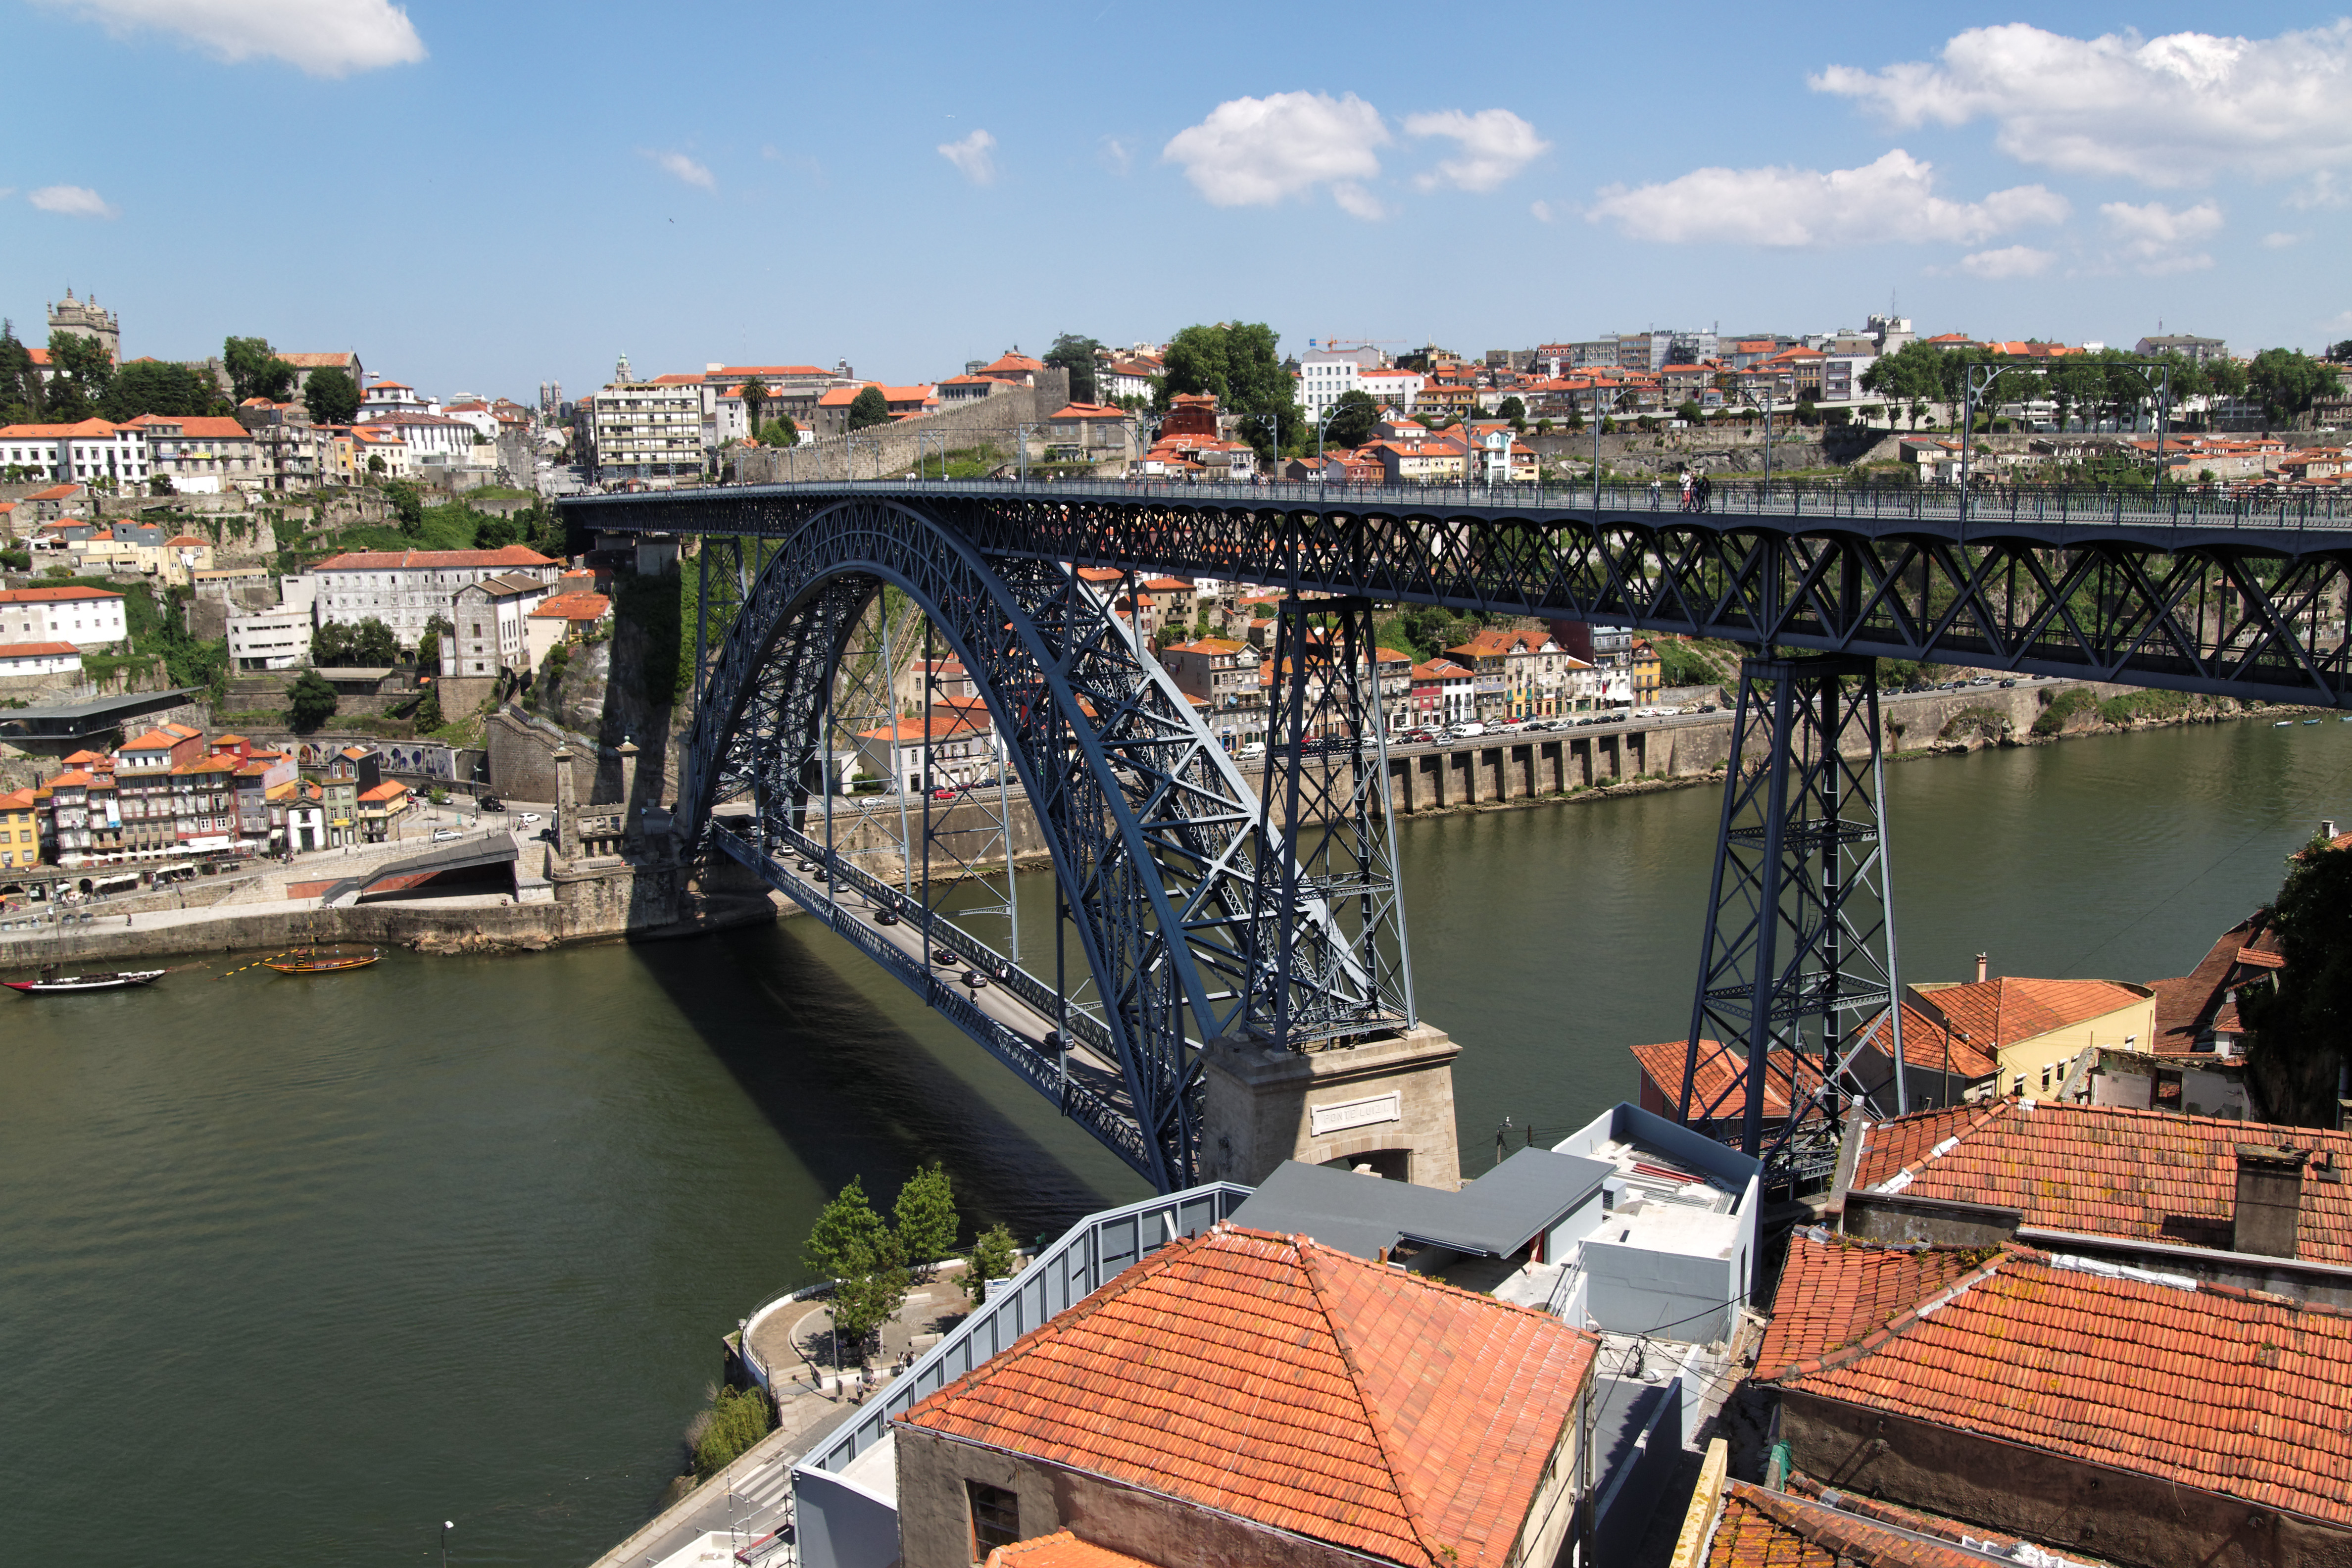 Dom Luís Bridge #6